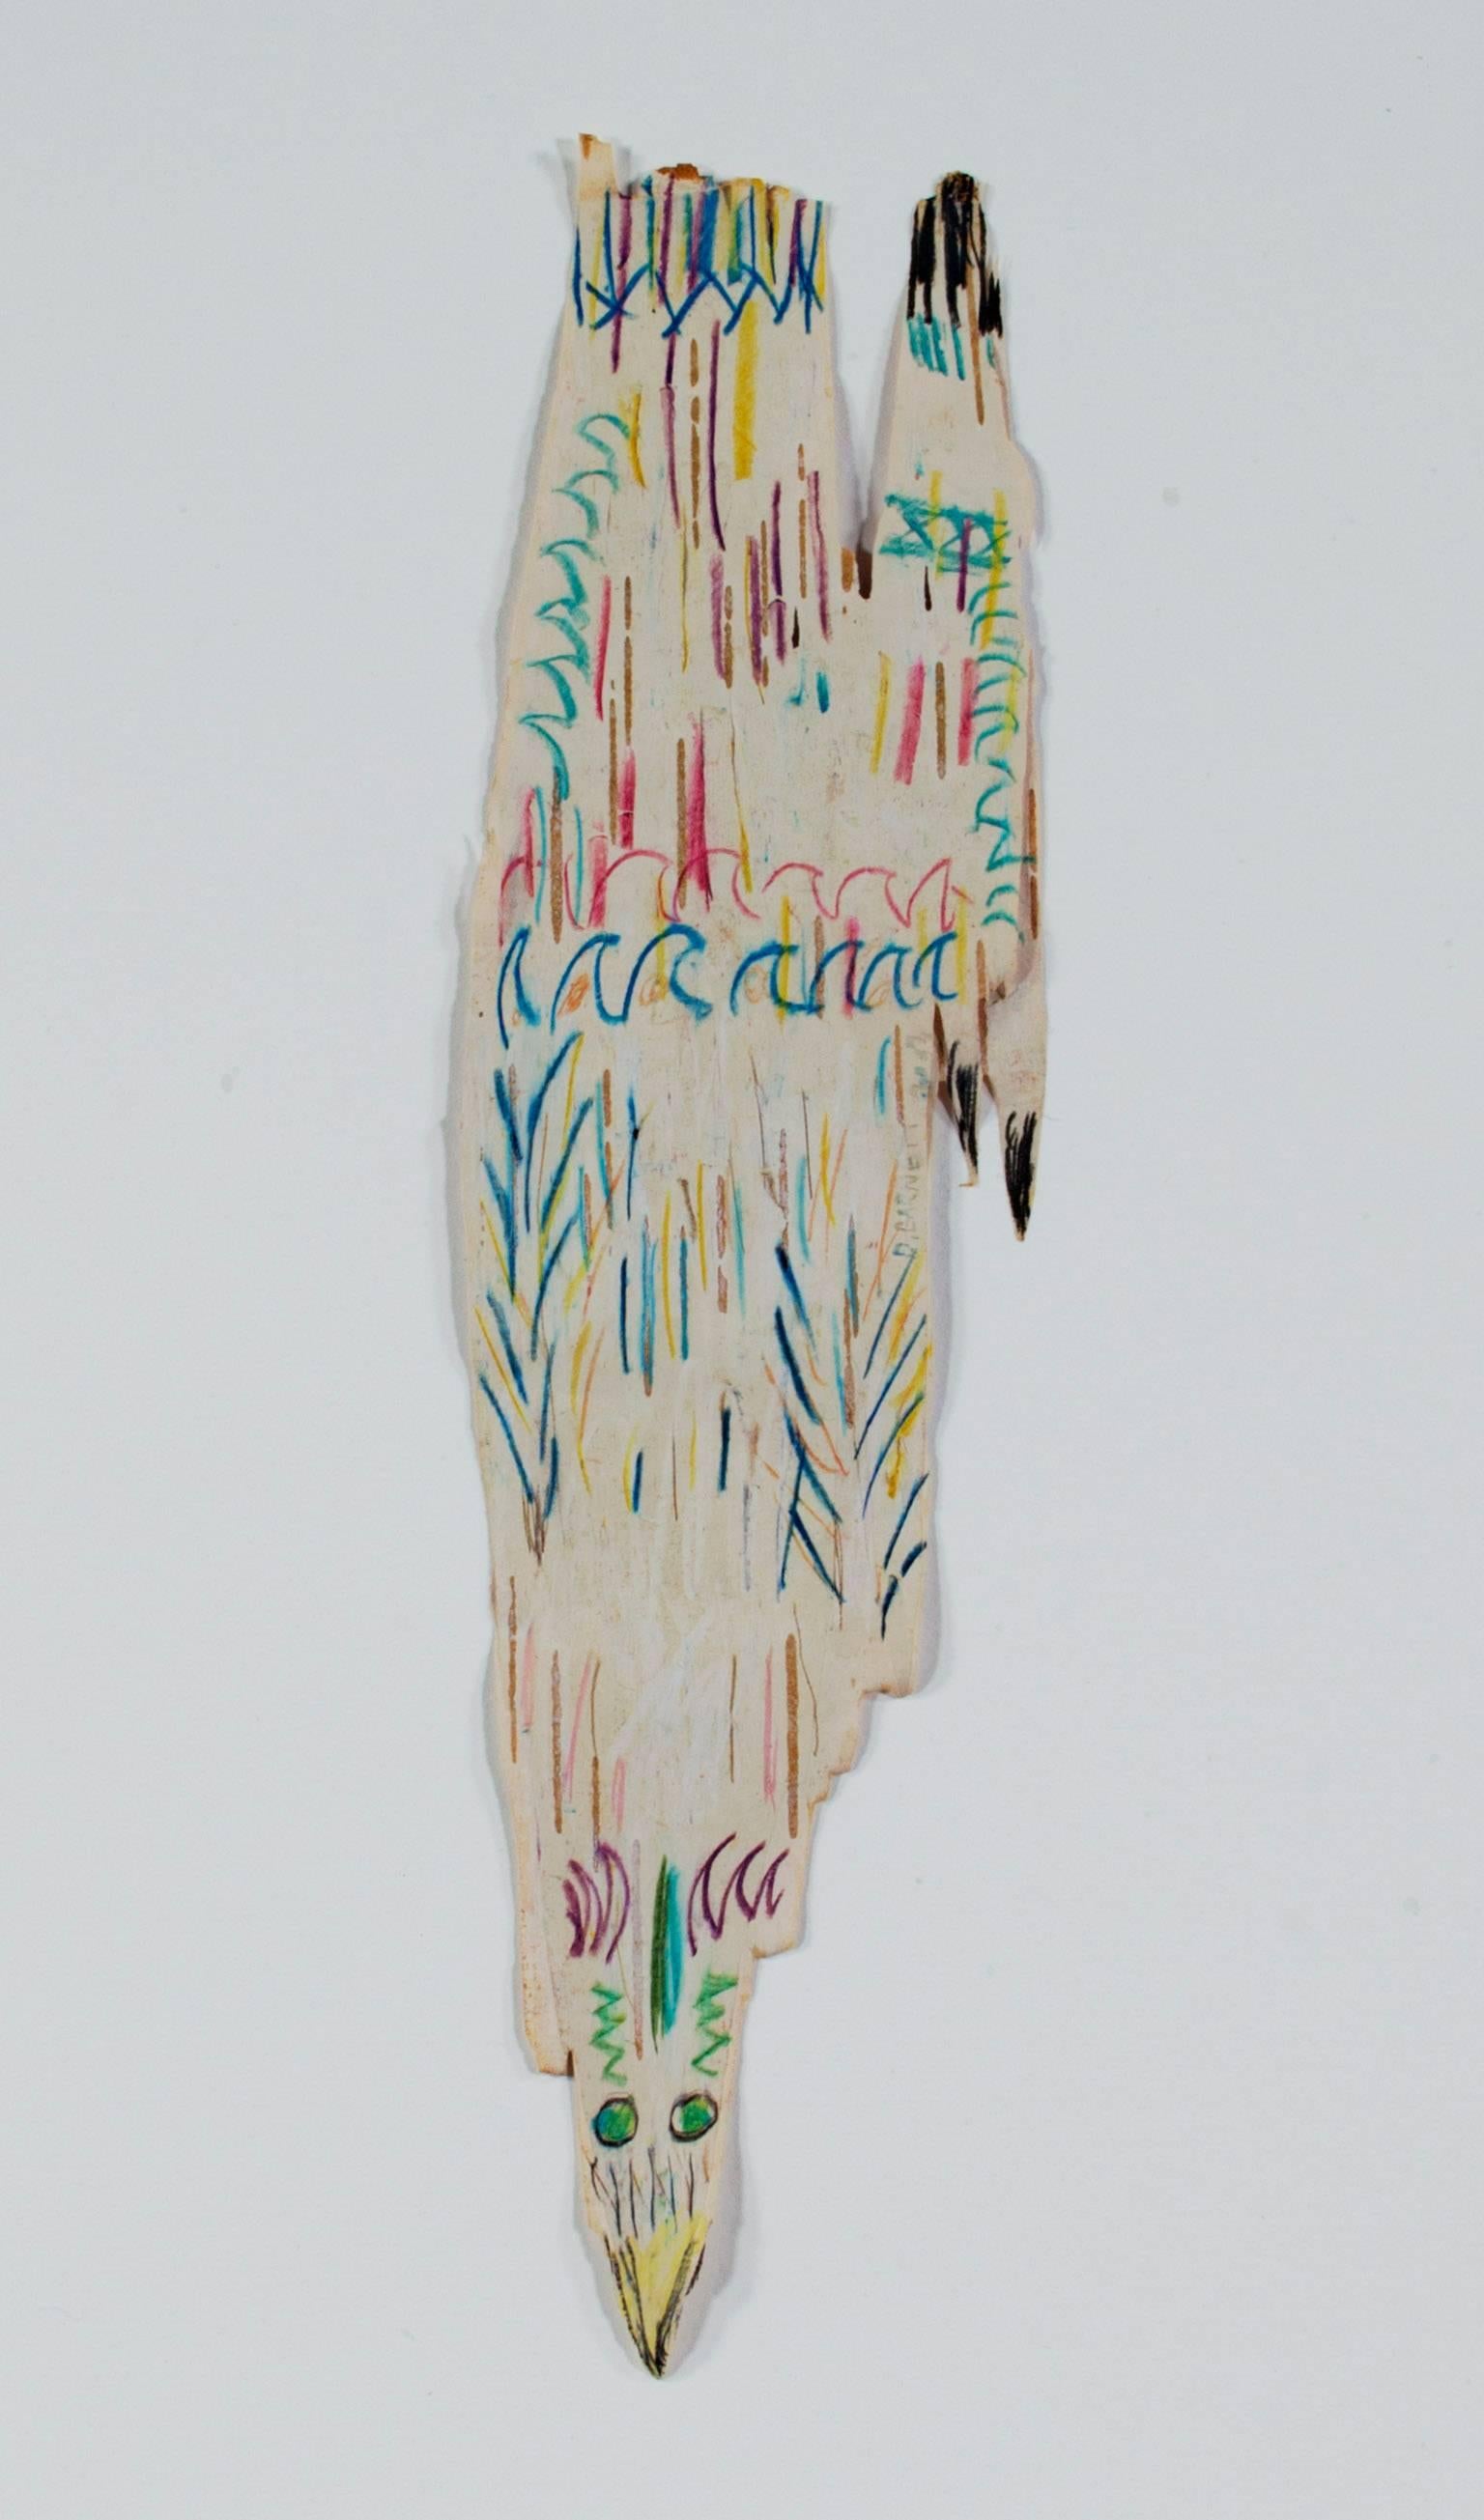 "Bald Eagle River Spirit, " an Oil and Pencil on Birch Bark signed by Barnett - Art by David Barnett